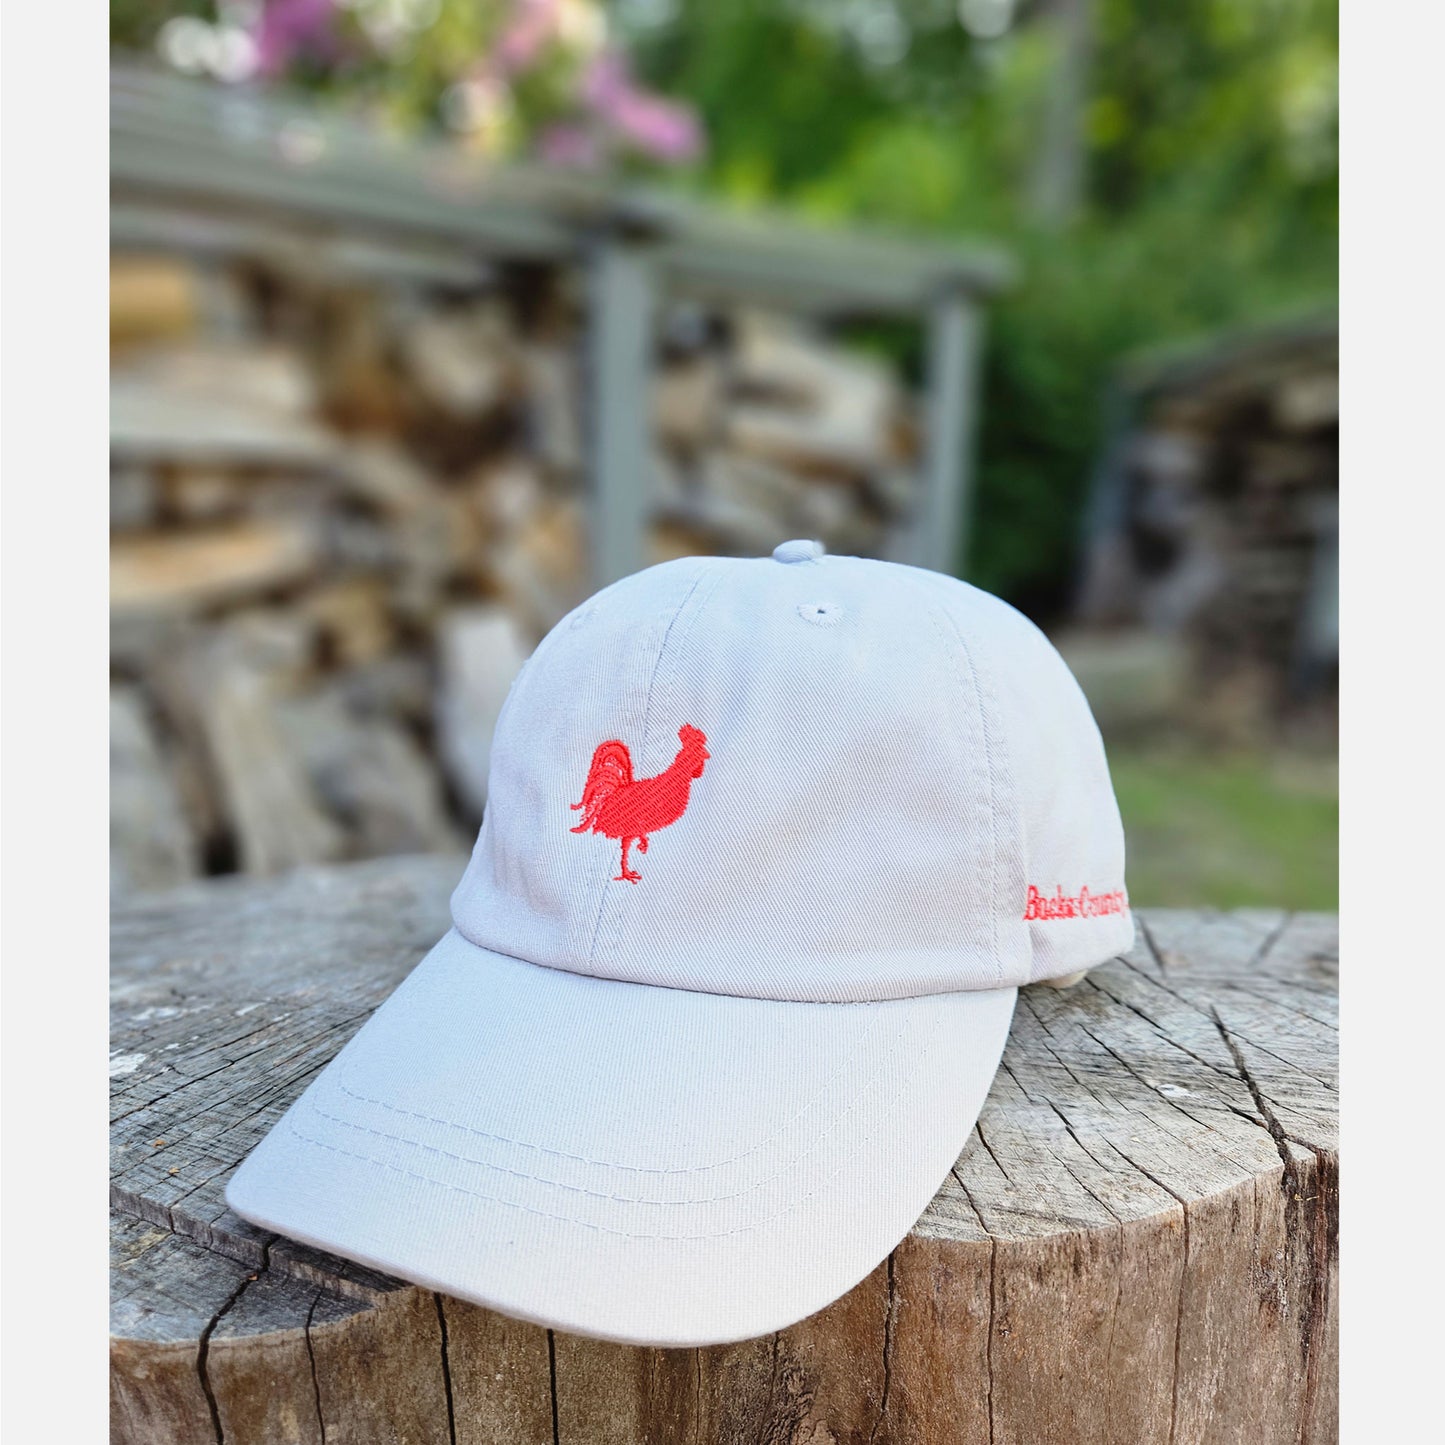 Bucks County Collection Needlepoint Hats